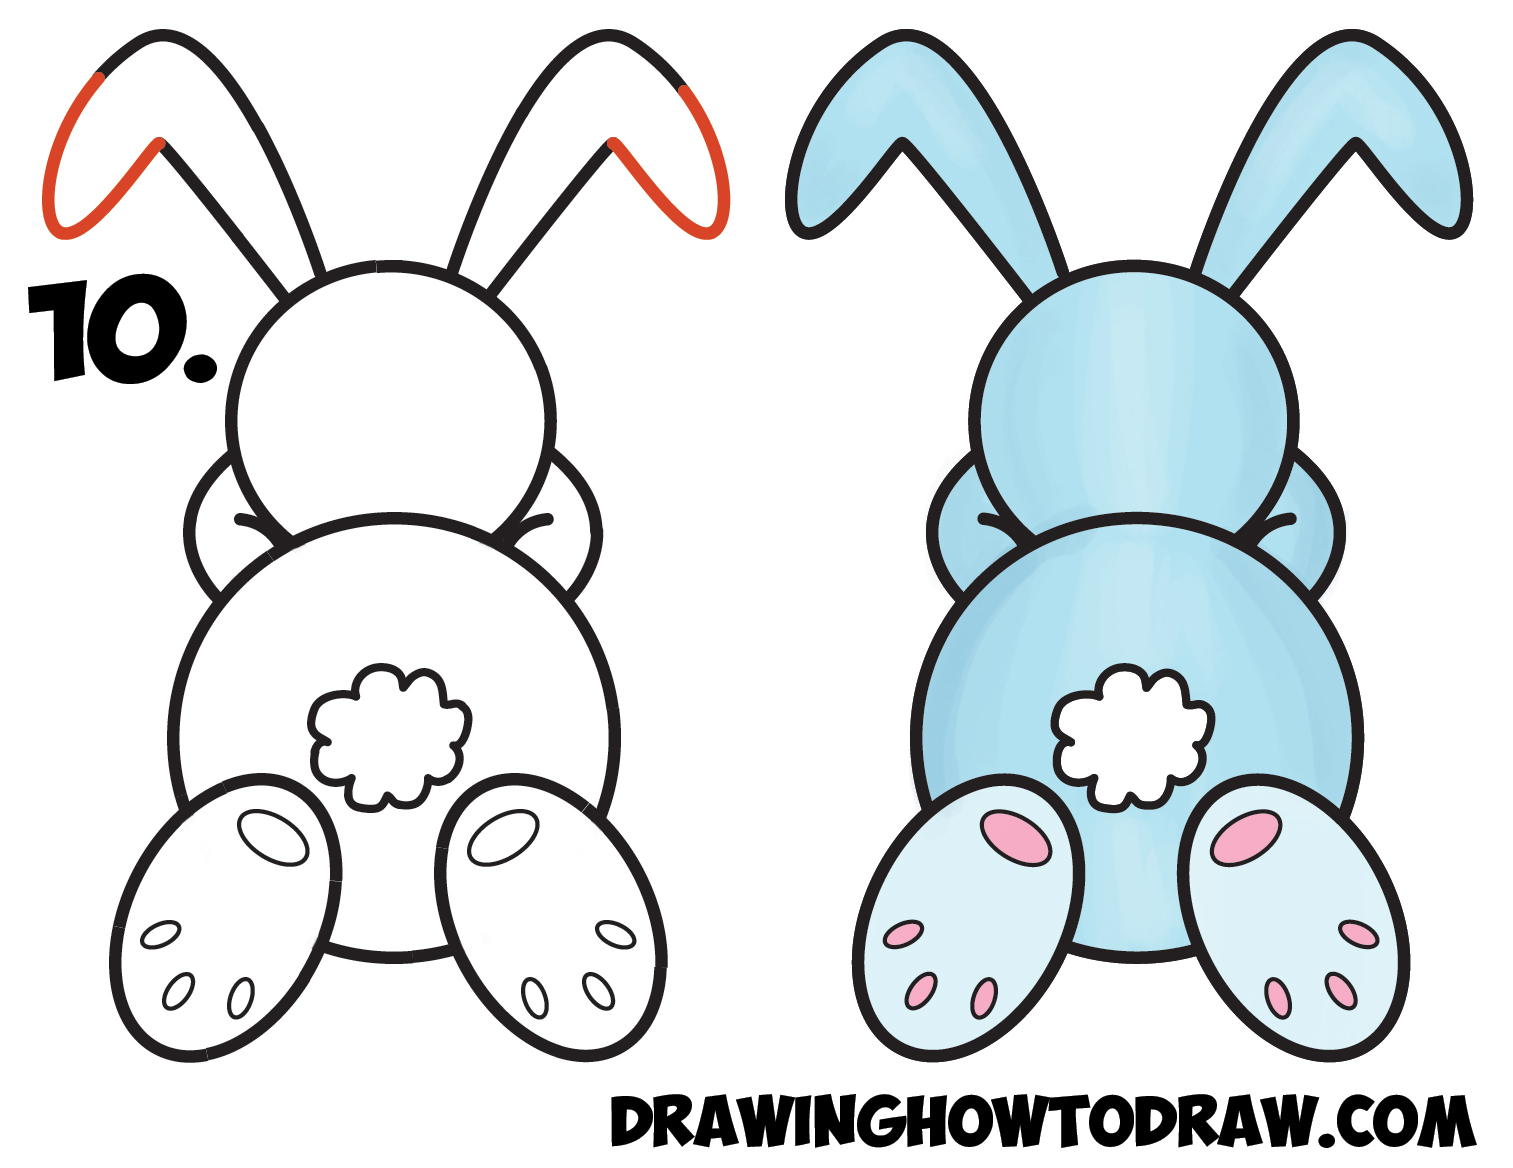 How To Draw A Cartoon Rabbit Easy